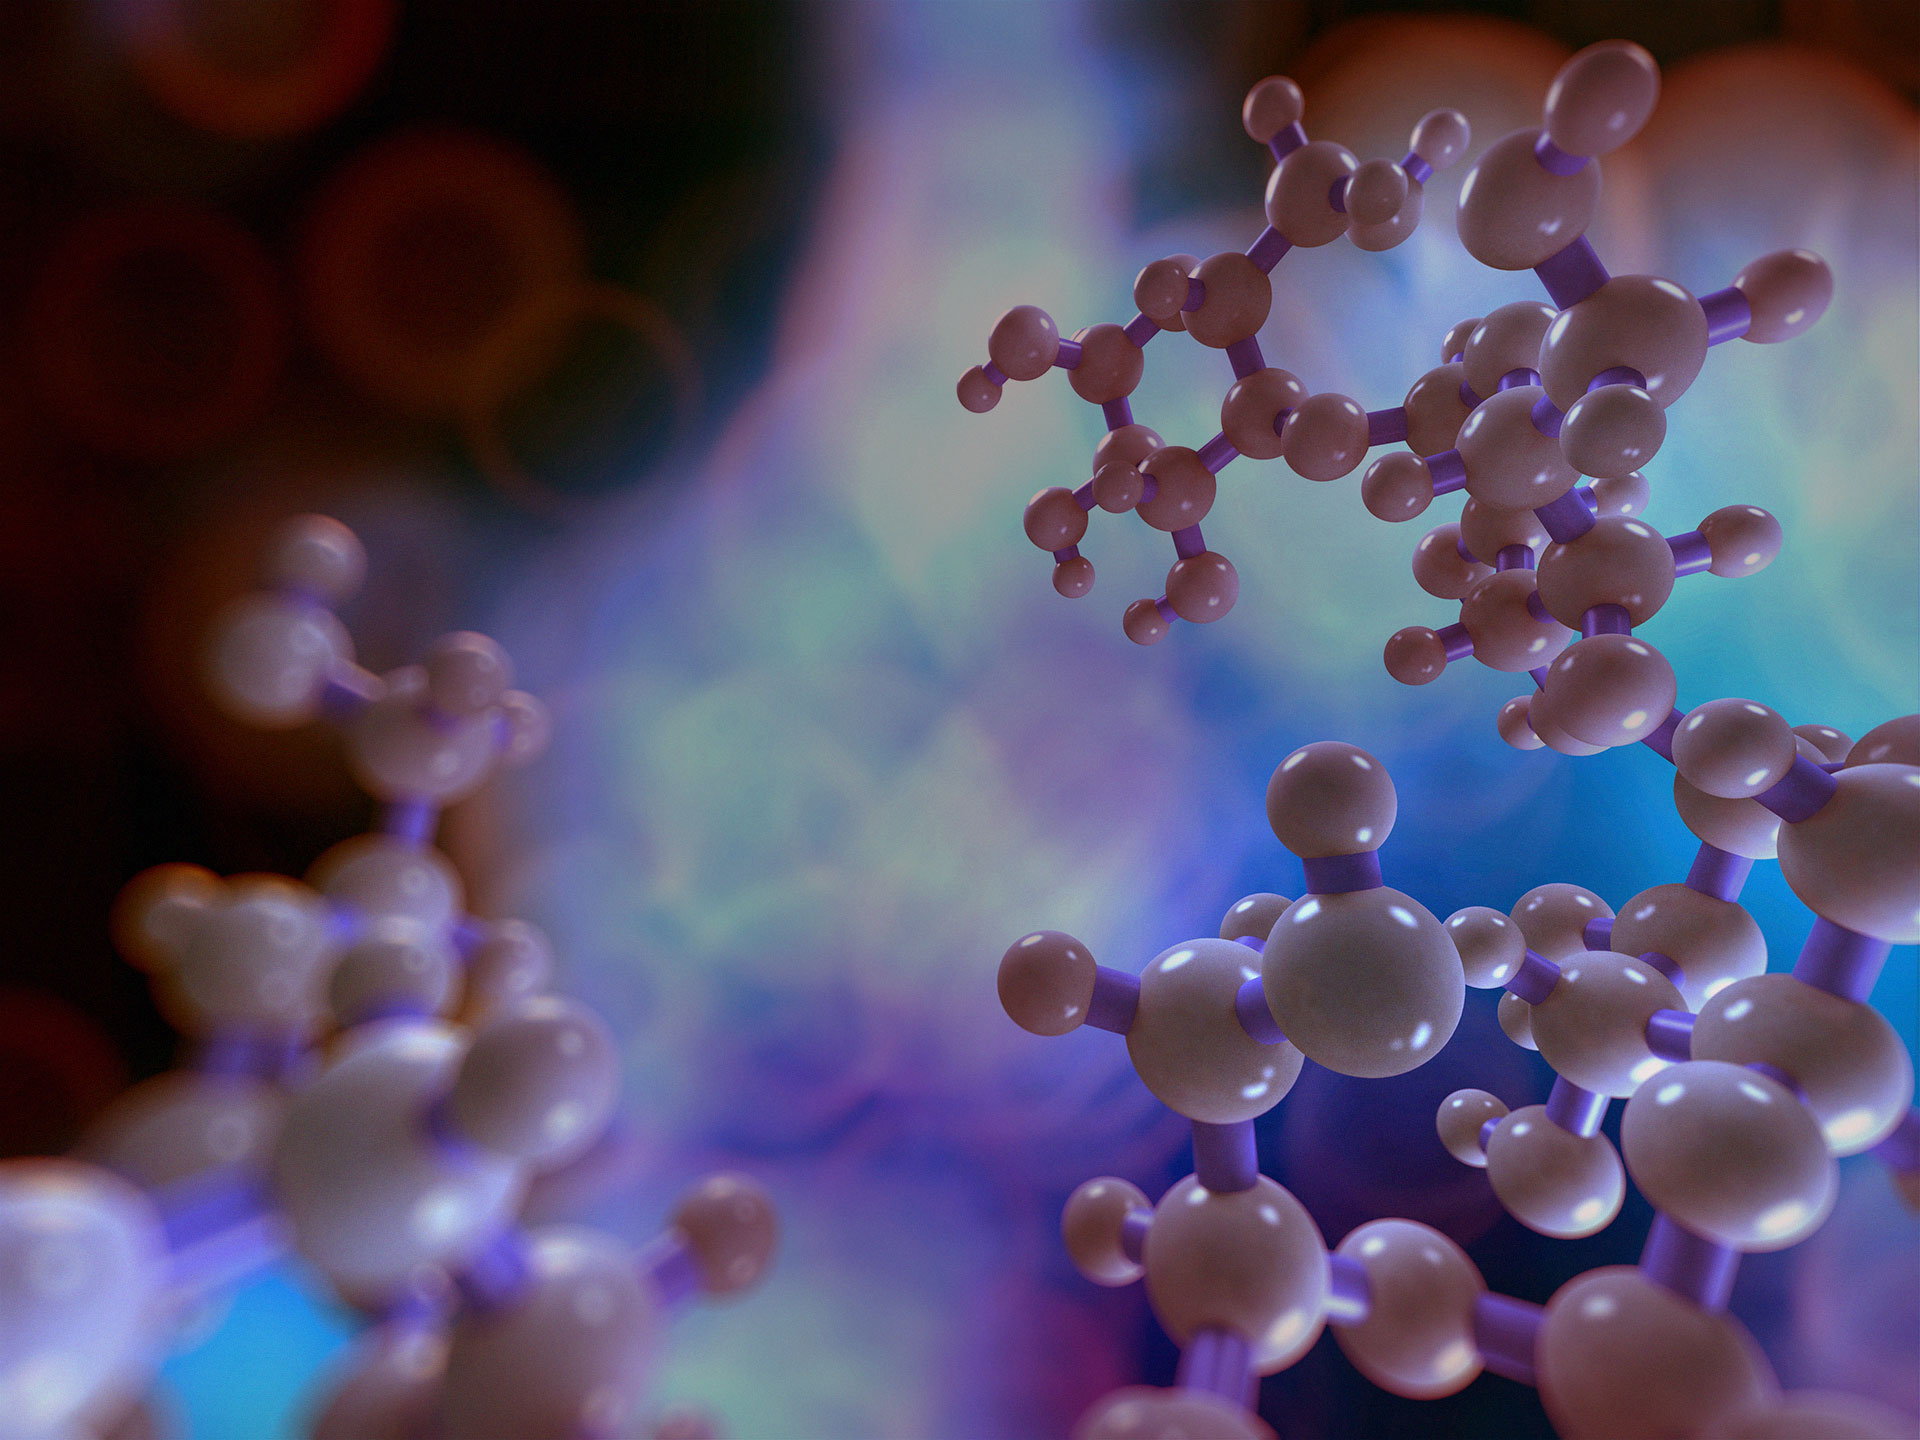 Фото молекулы. Молекула. Фотография молекулы. Молекула под микроскопом. Снимок молекулы.